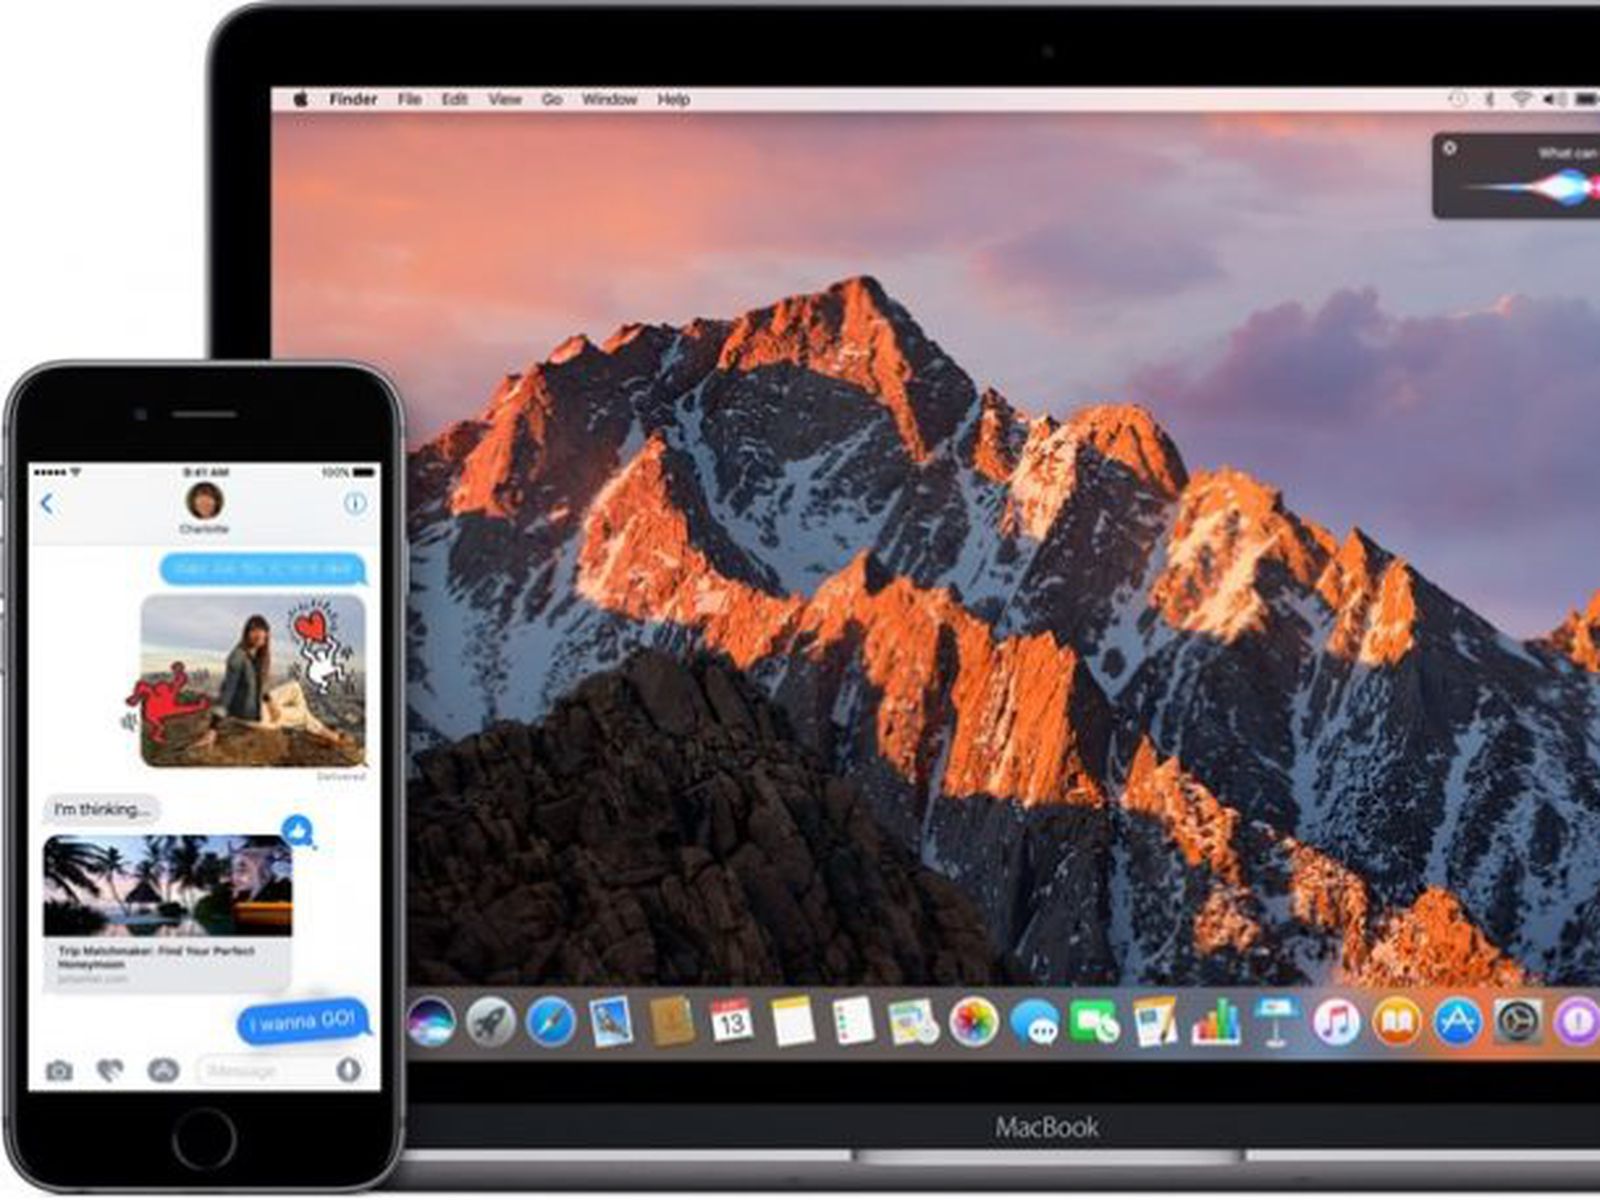 Apple Releases Macos Sierra With Siri Apple Pay Apple Watch Unlock Universal Clipboard And More Macrumors